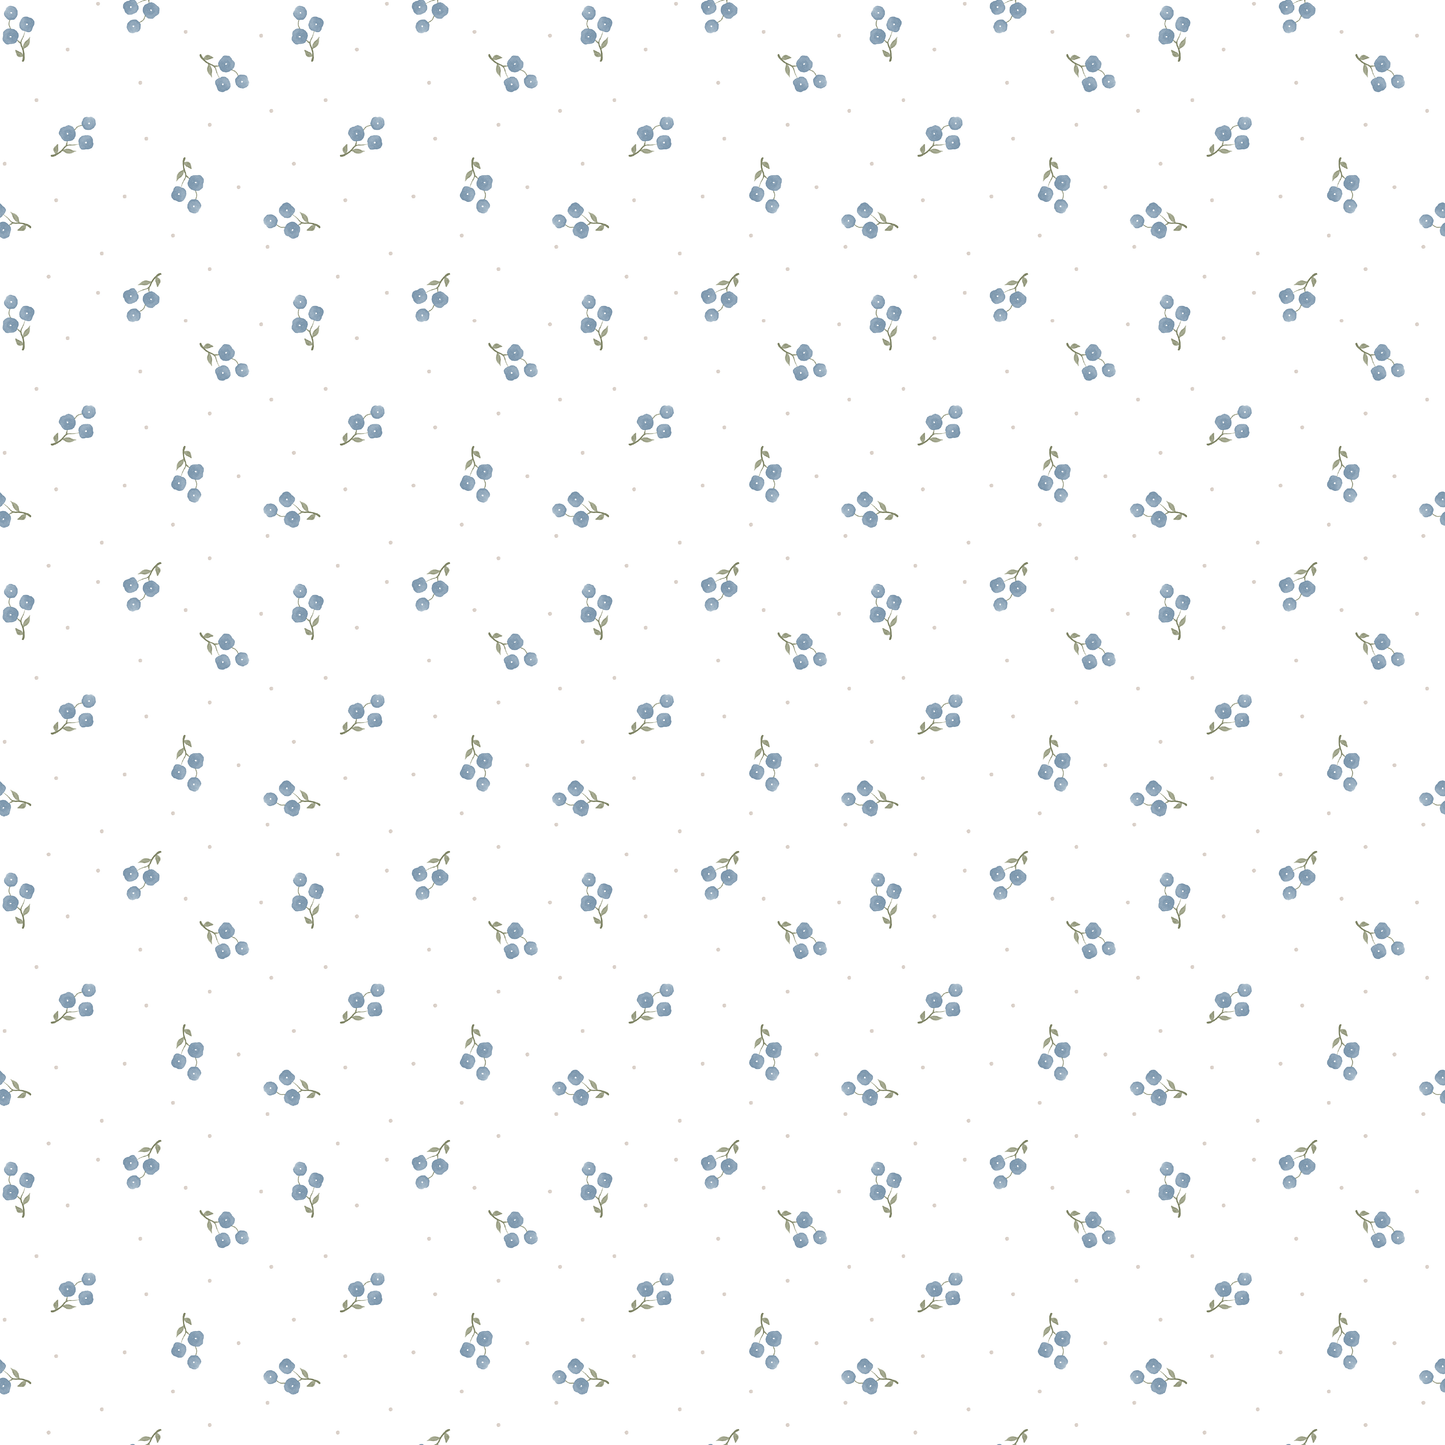 Flower Dot Contact Paper  - pack of 3 rolls (24x48" each)